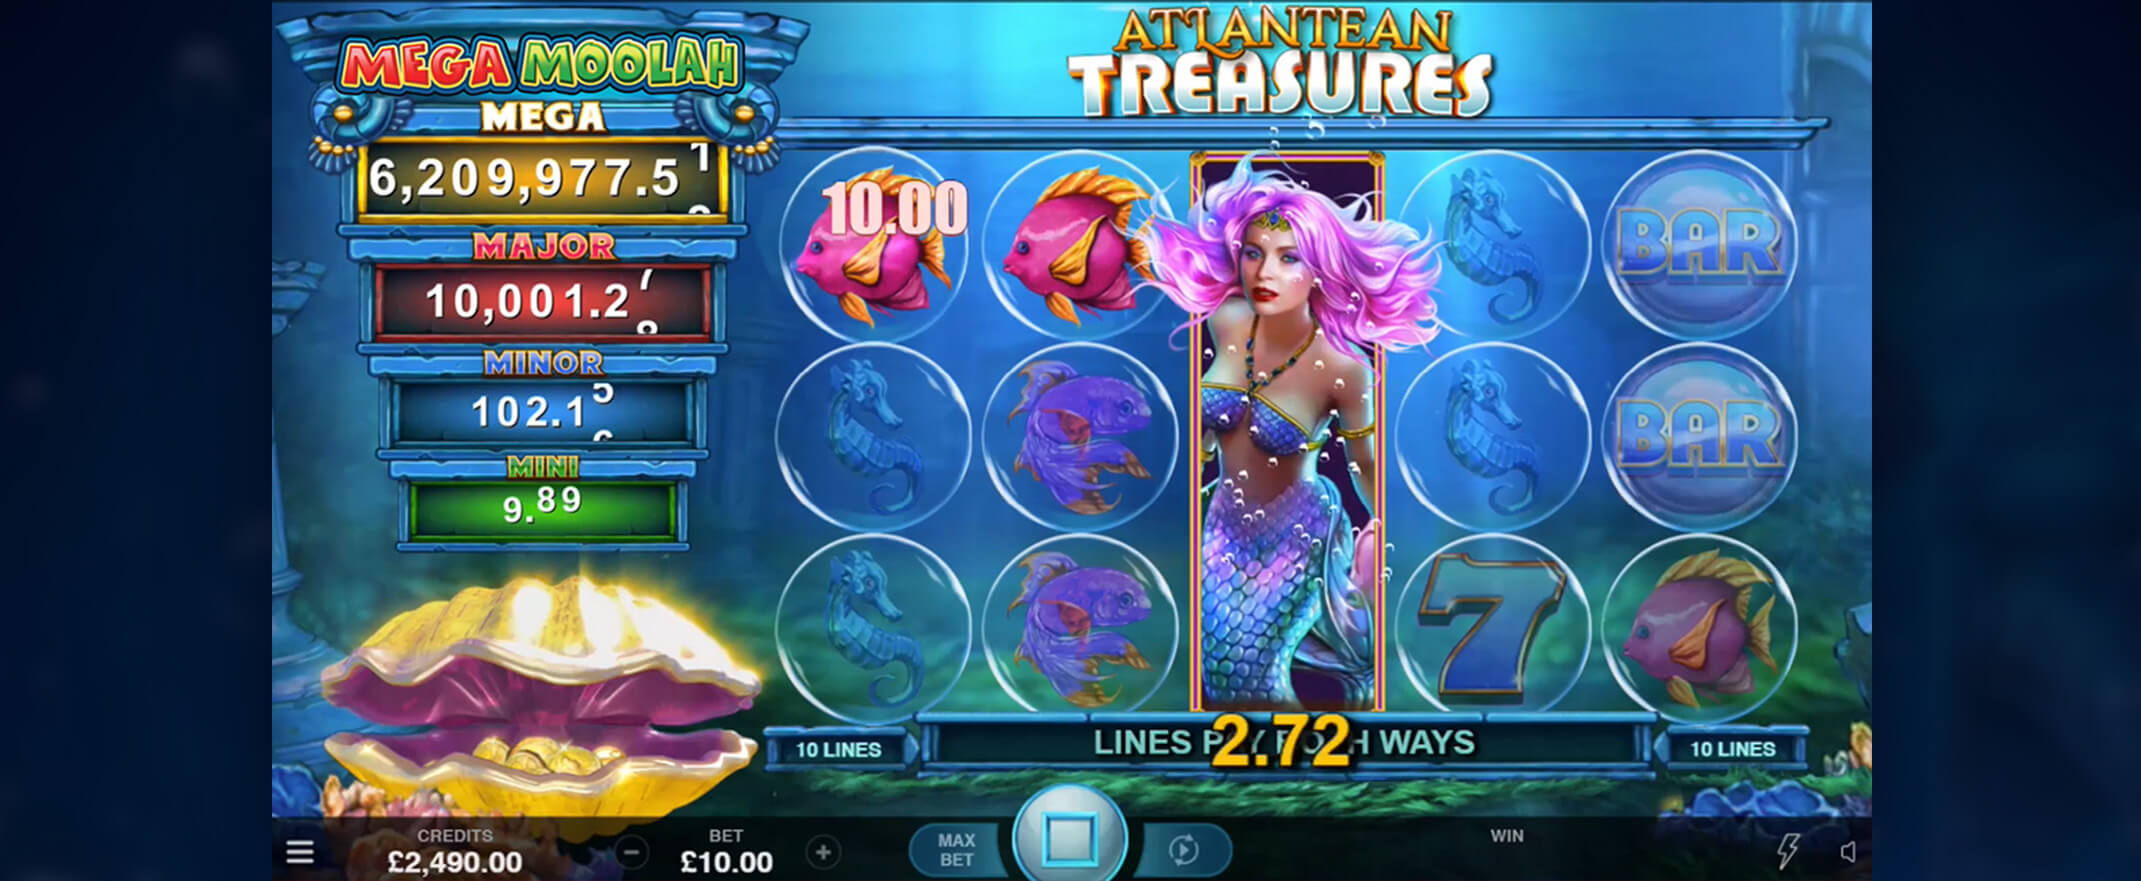 Atlantean Treasures Mega Moolah Slot Review - an image of the slot reels